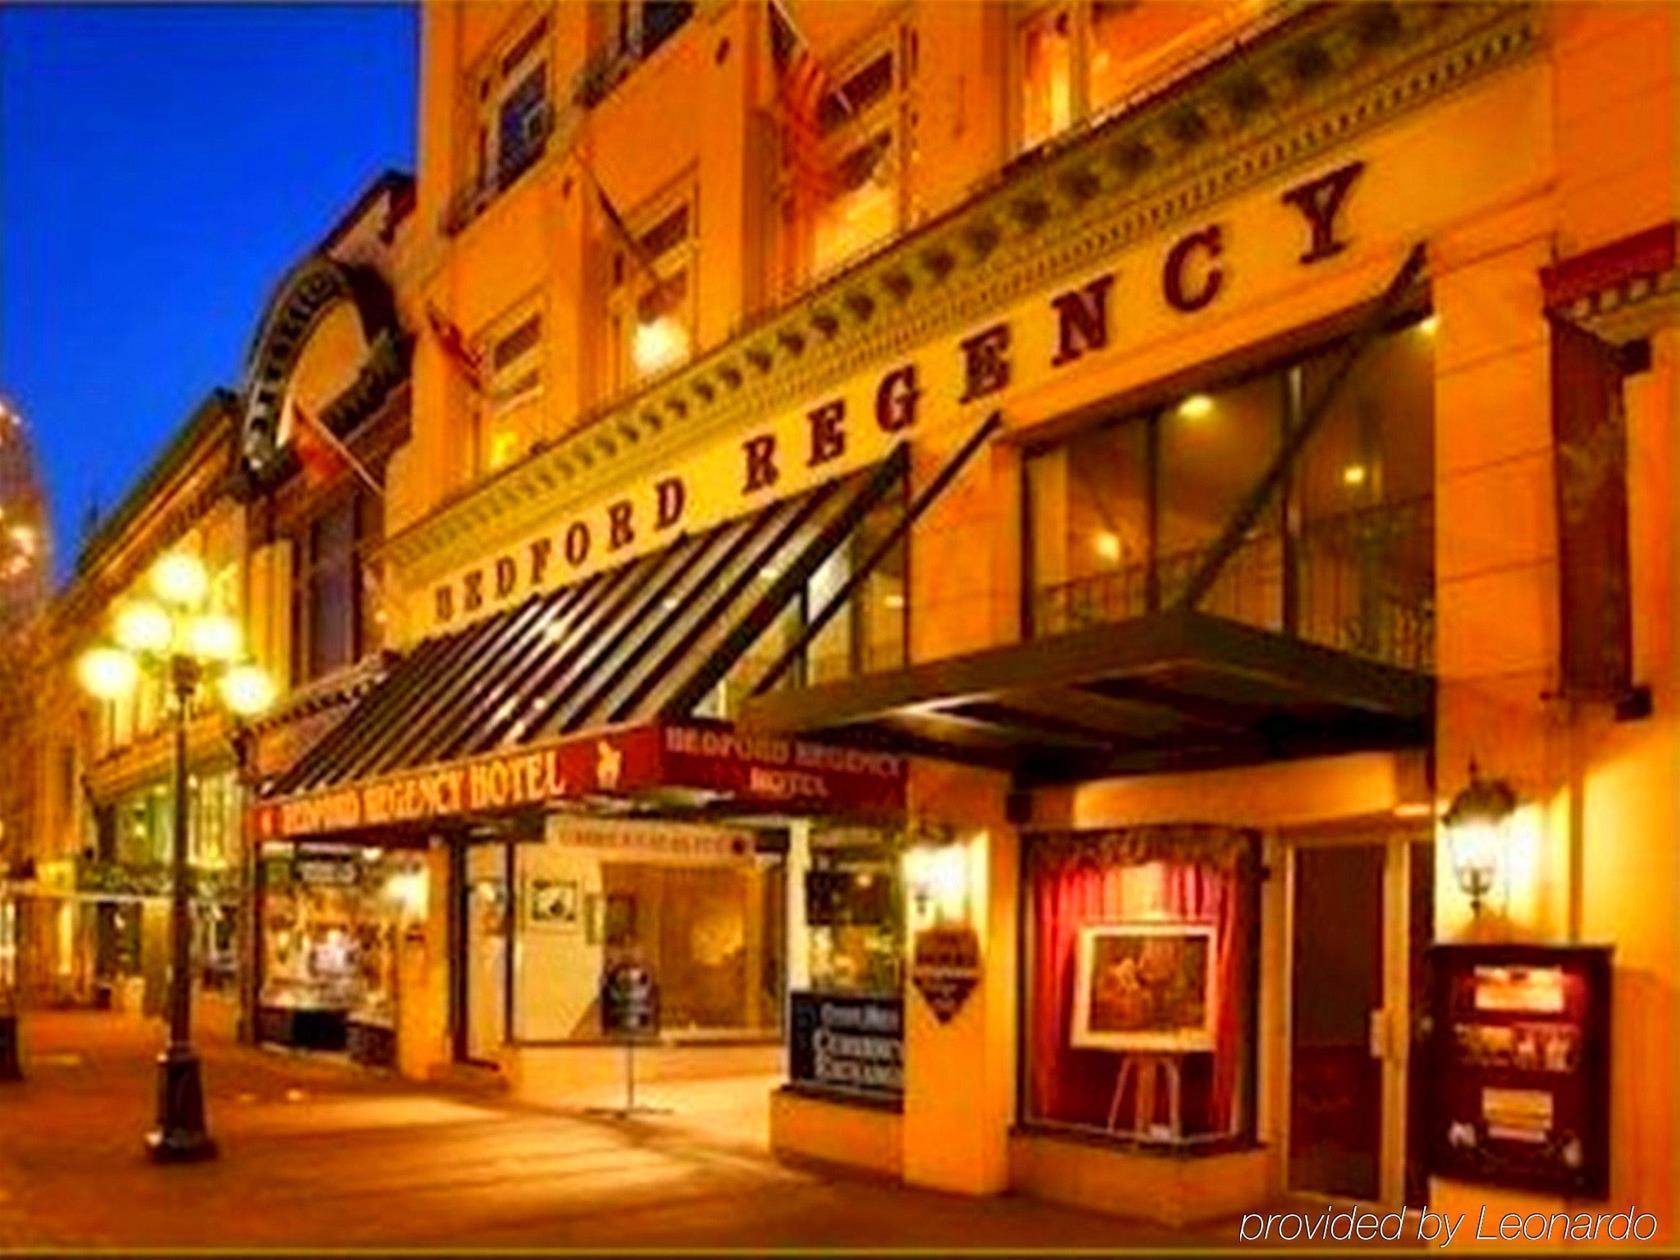 Bedford Regency Hotel